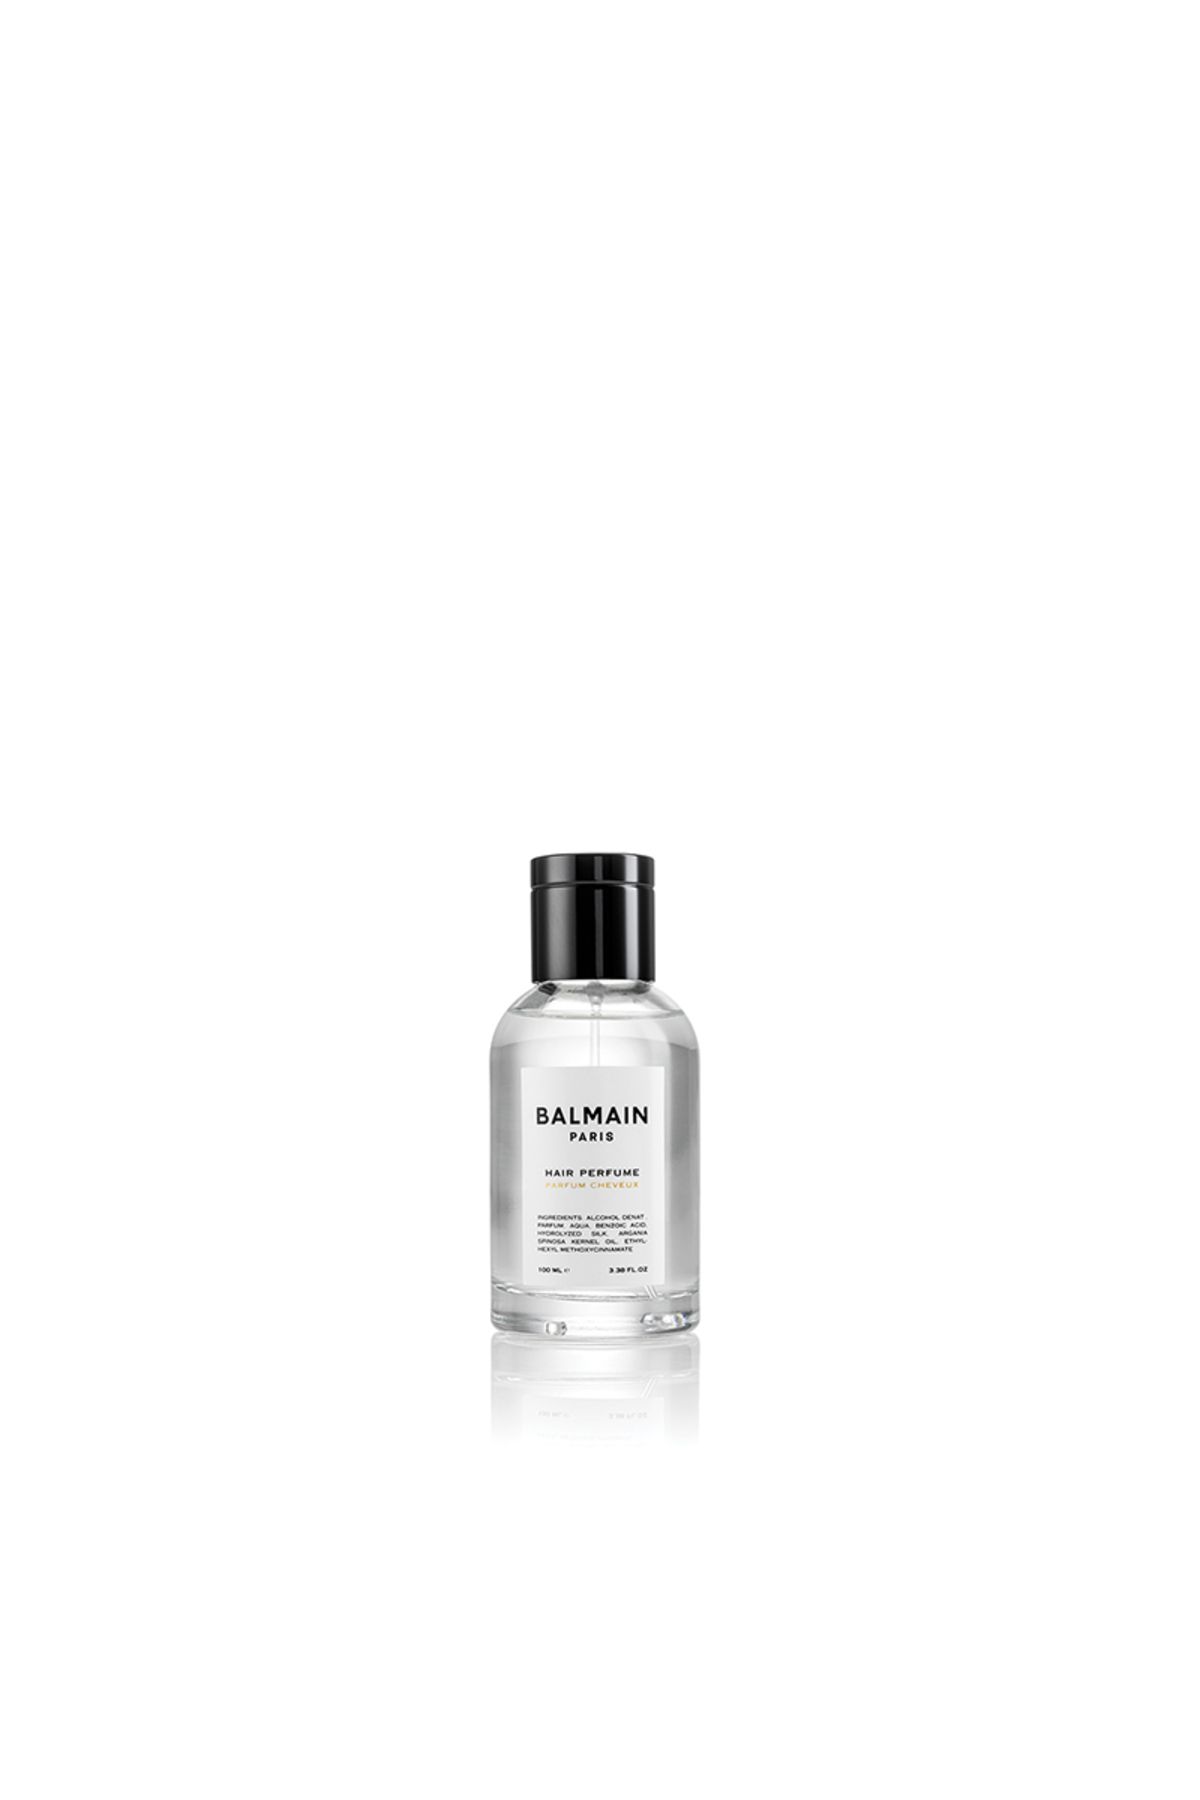 BALMAIN Hair Perfume Signature Fragrance 100ml